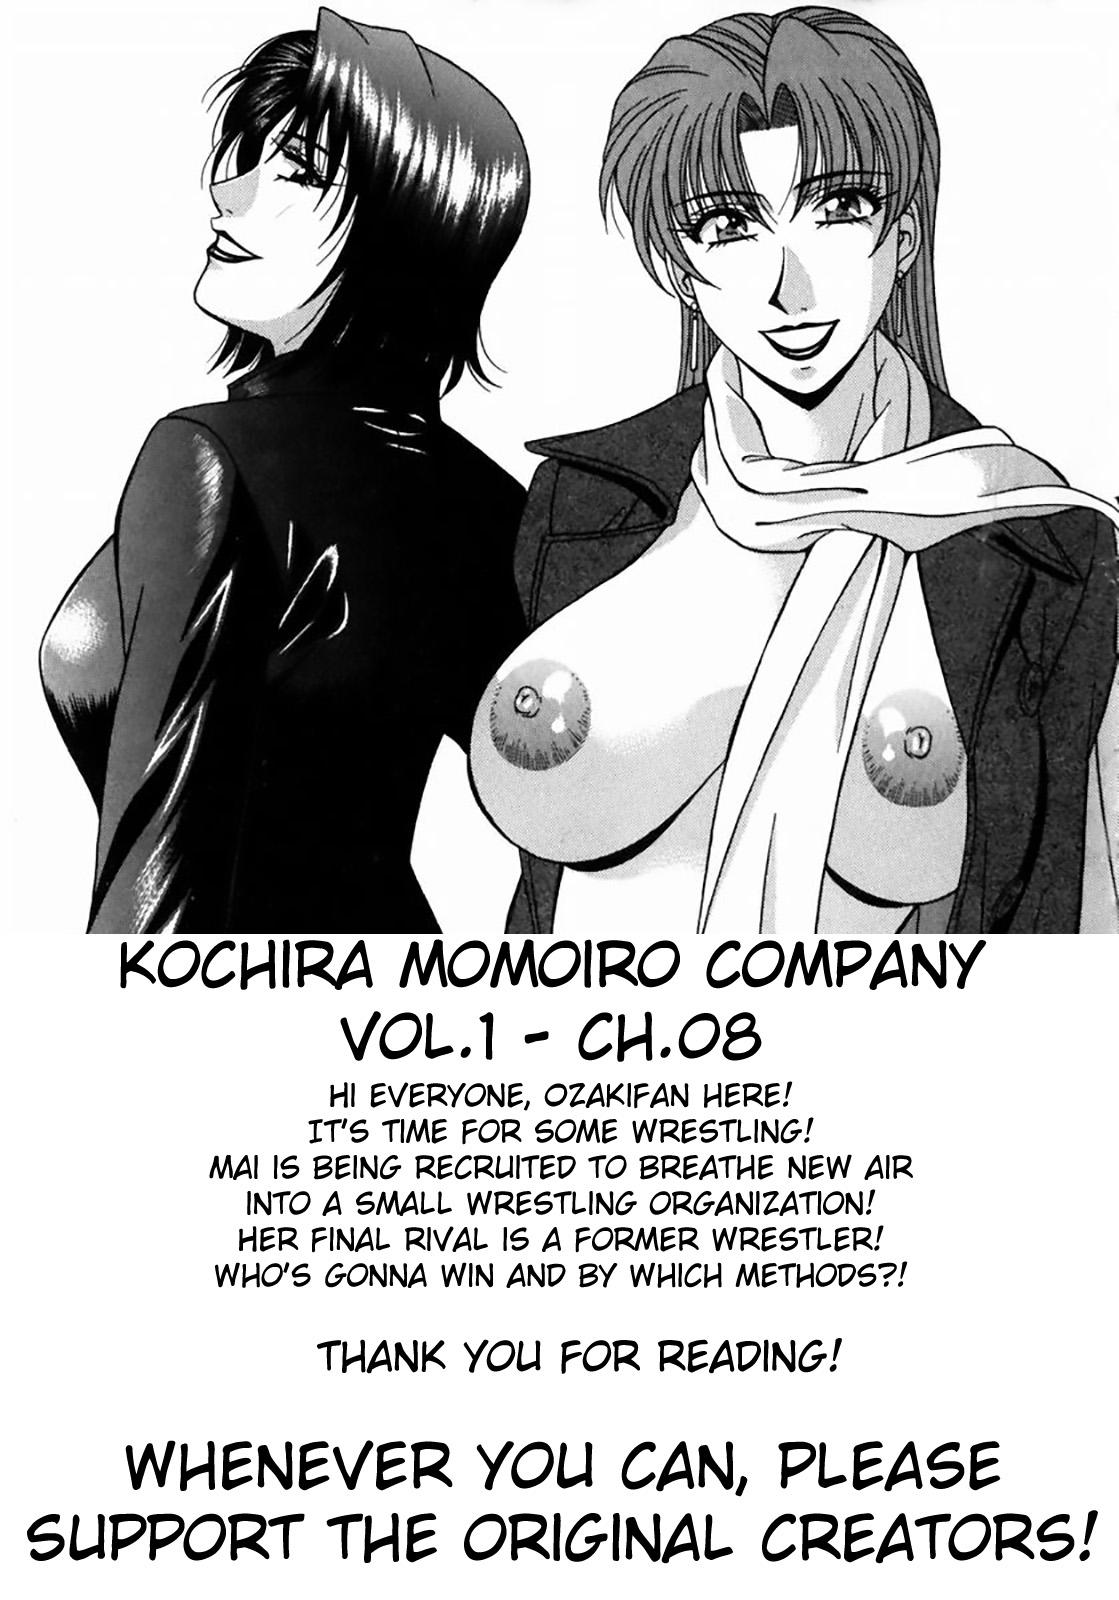 Master Kochira Momoiro Company Vol. 1 Ch. 1-8 Friend - Page 174